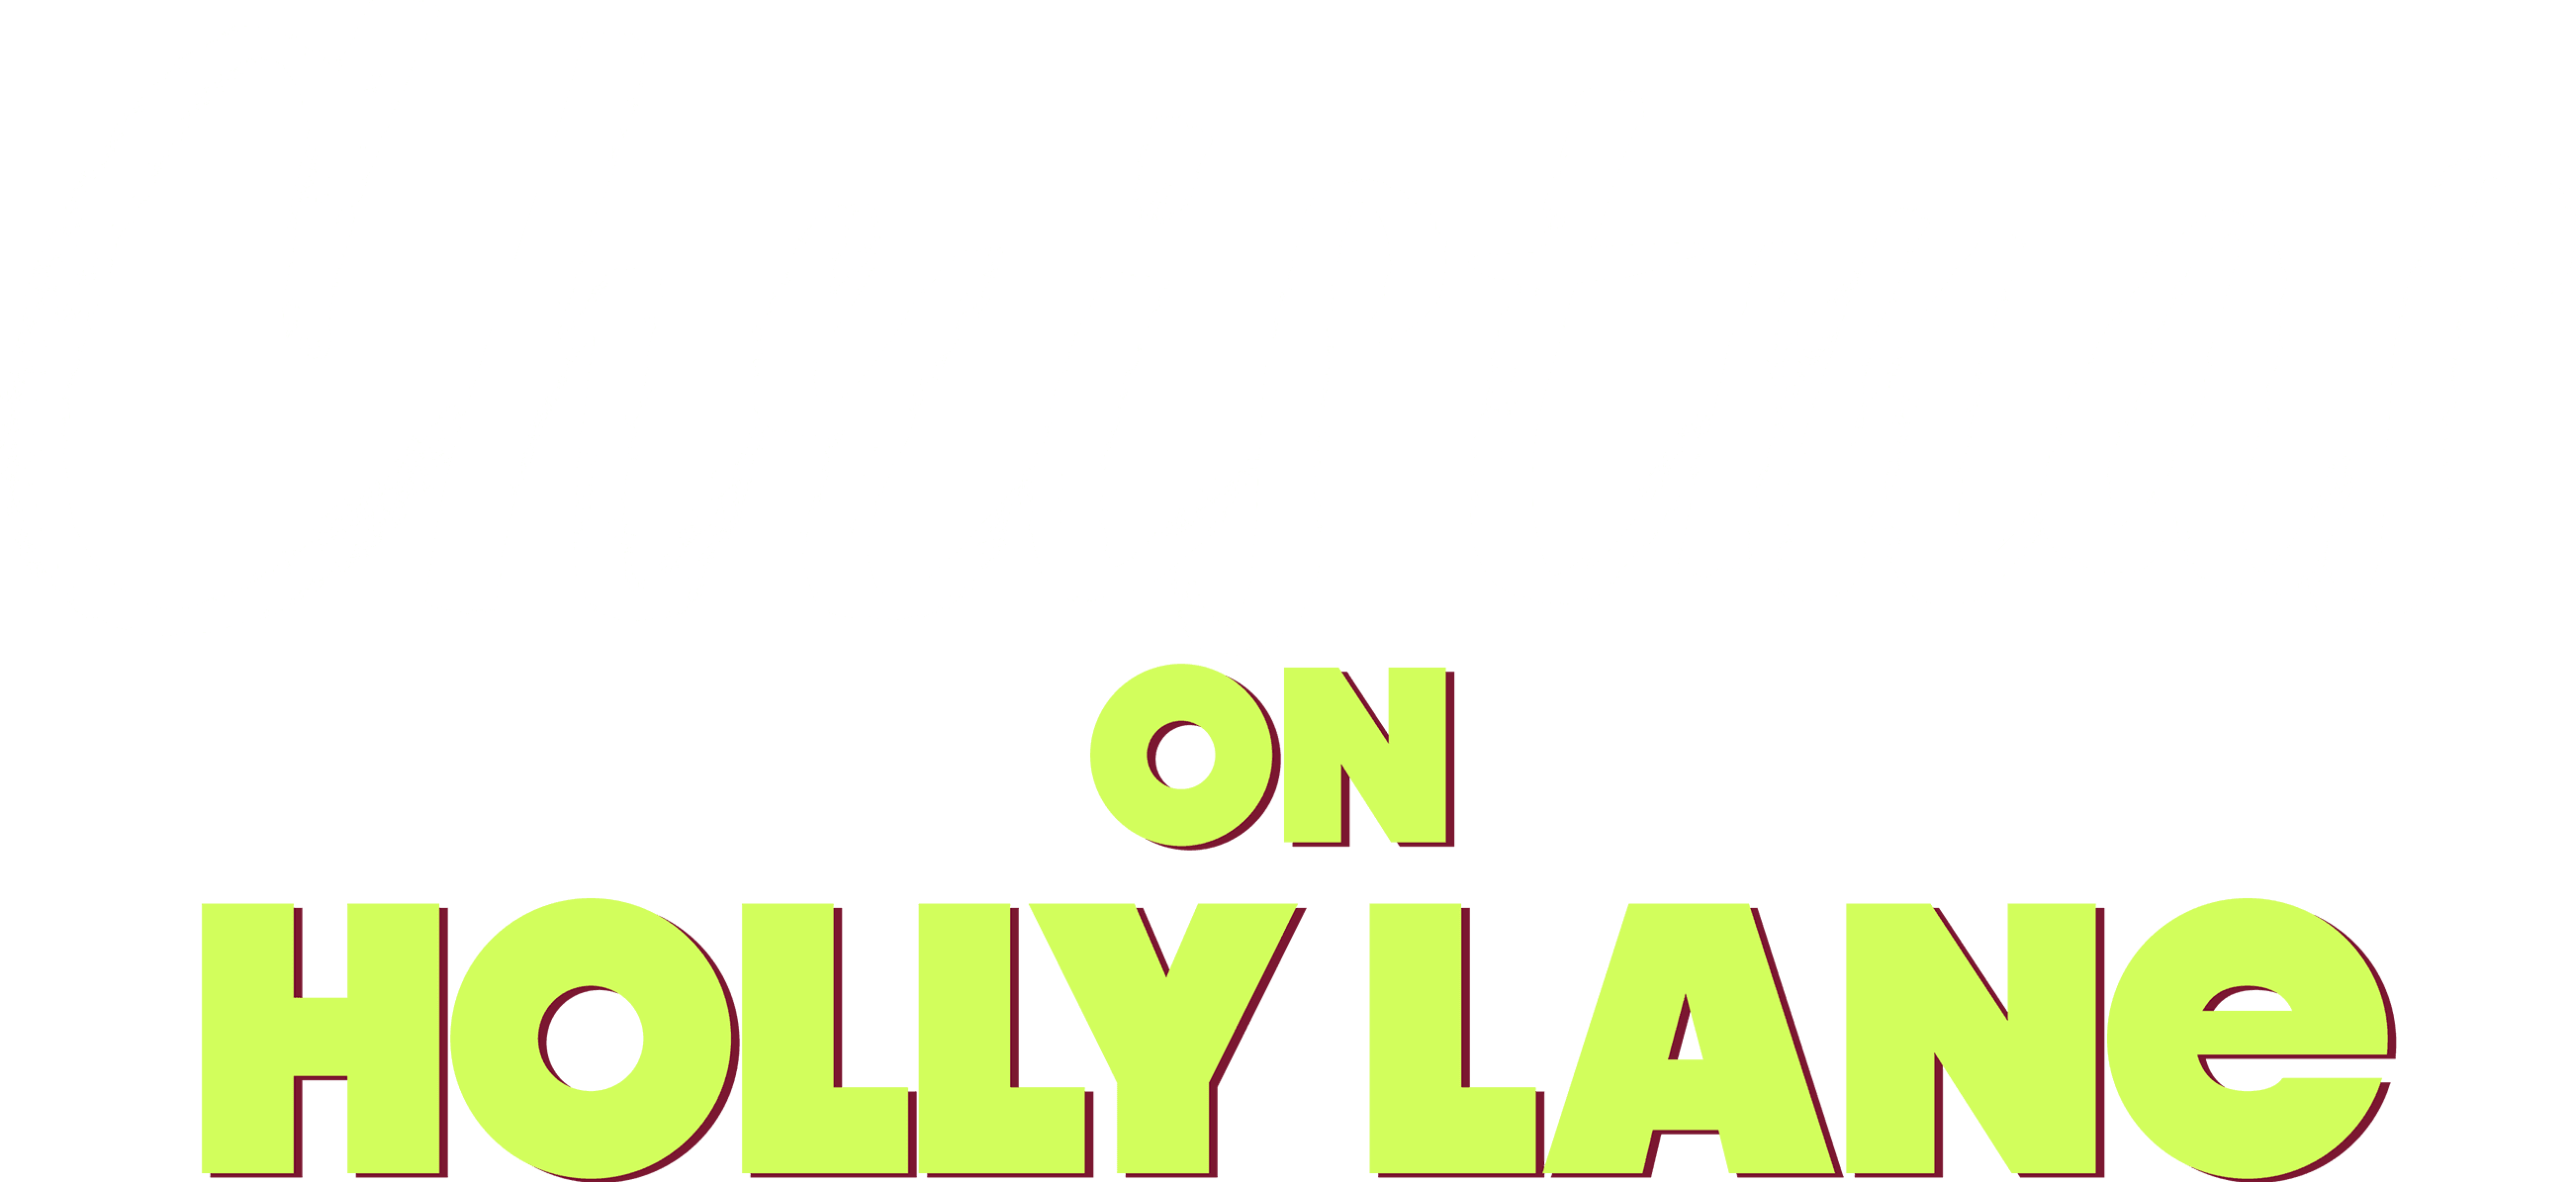 Christmas on Holly Lane logo